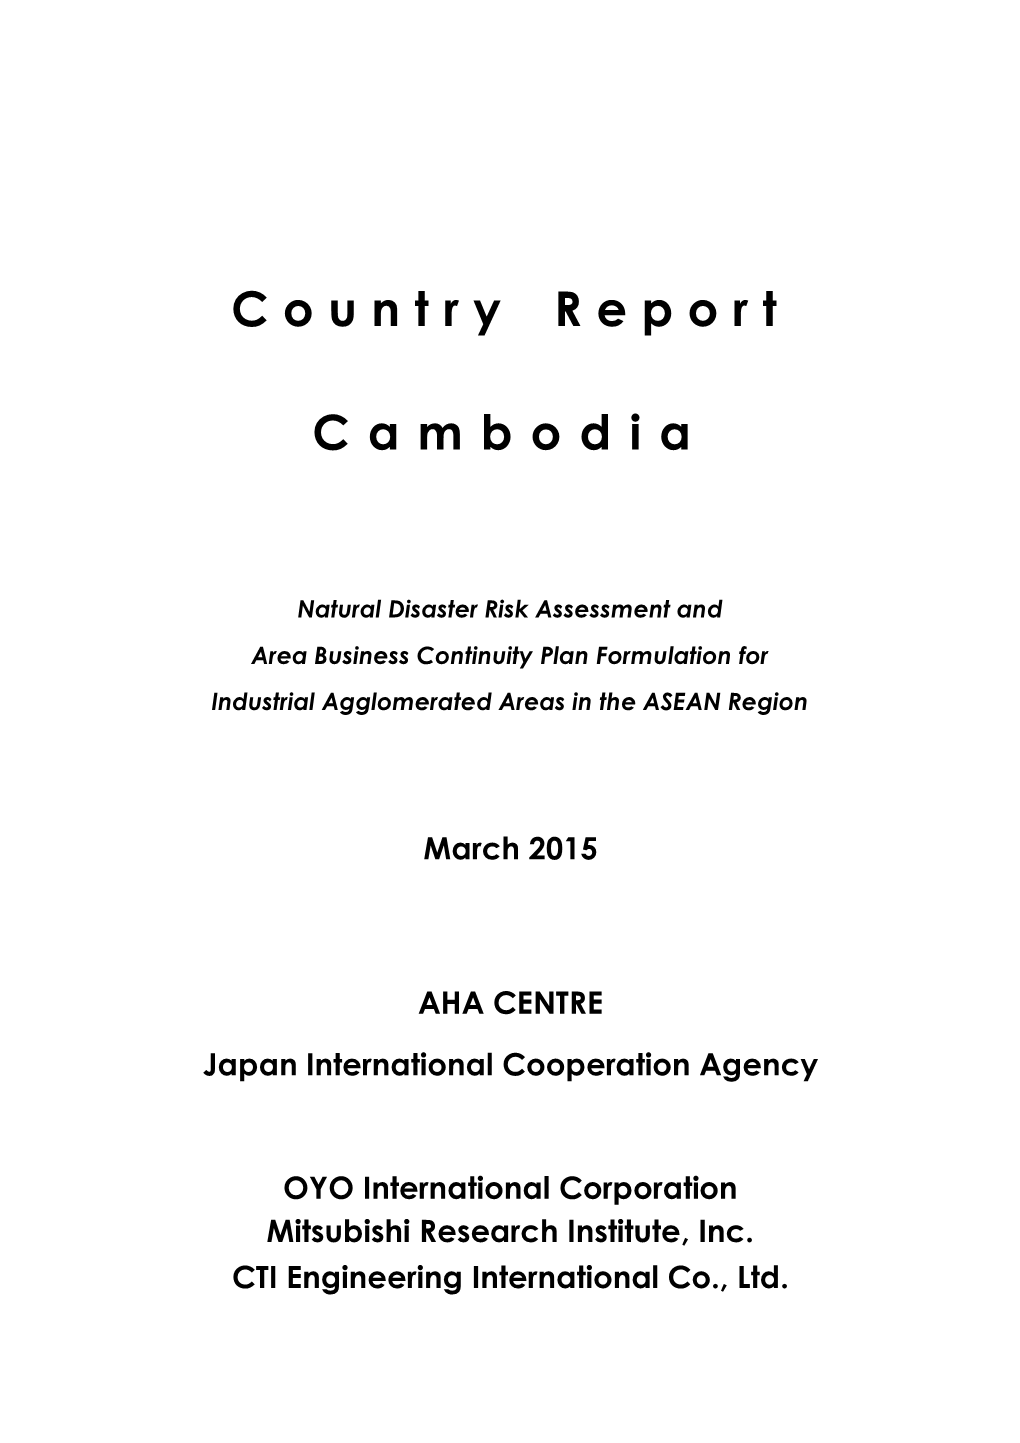 Country Report Cambodia